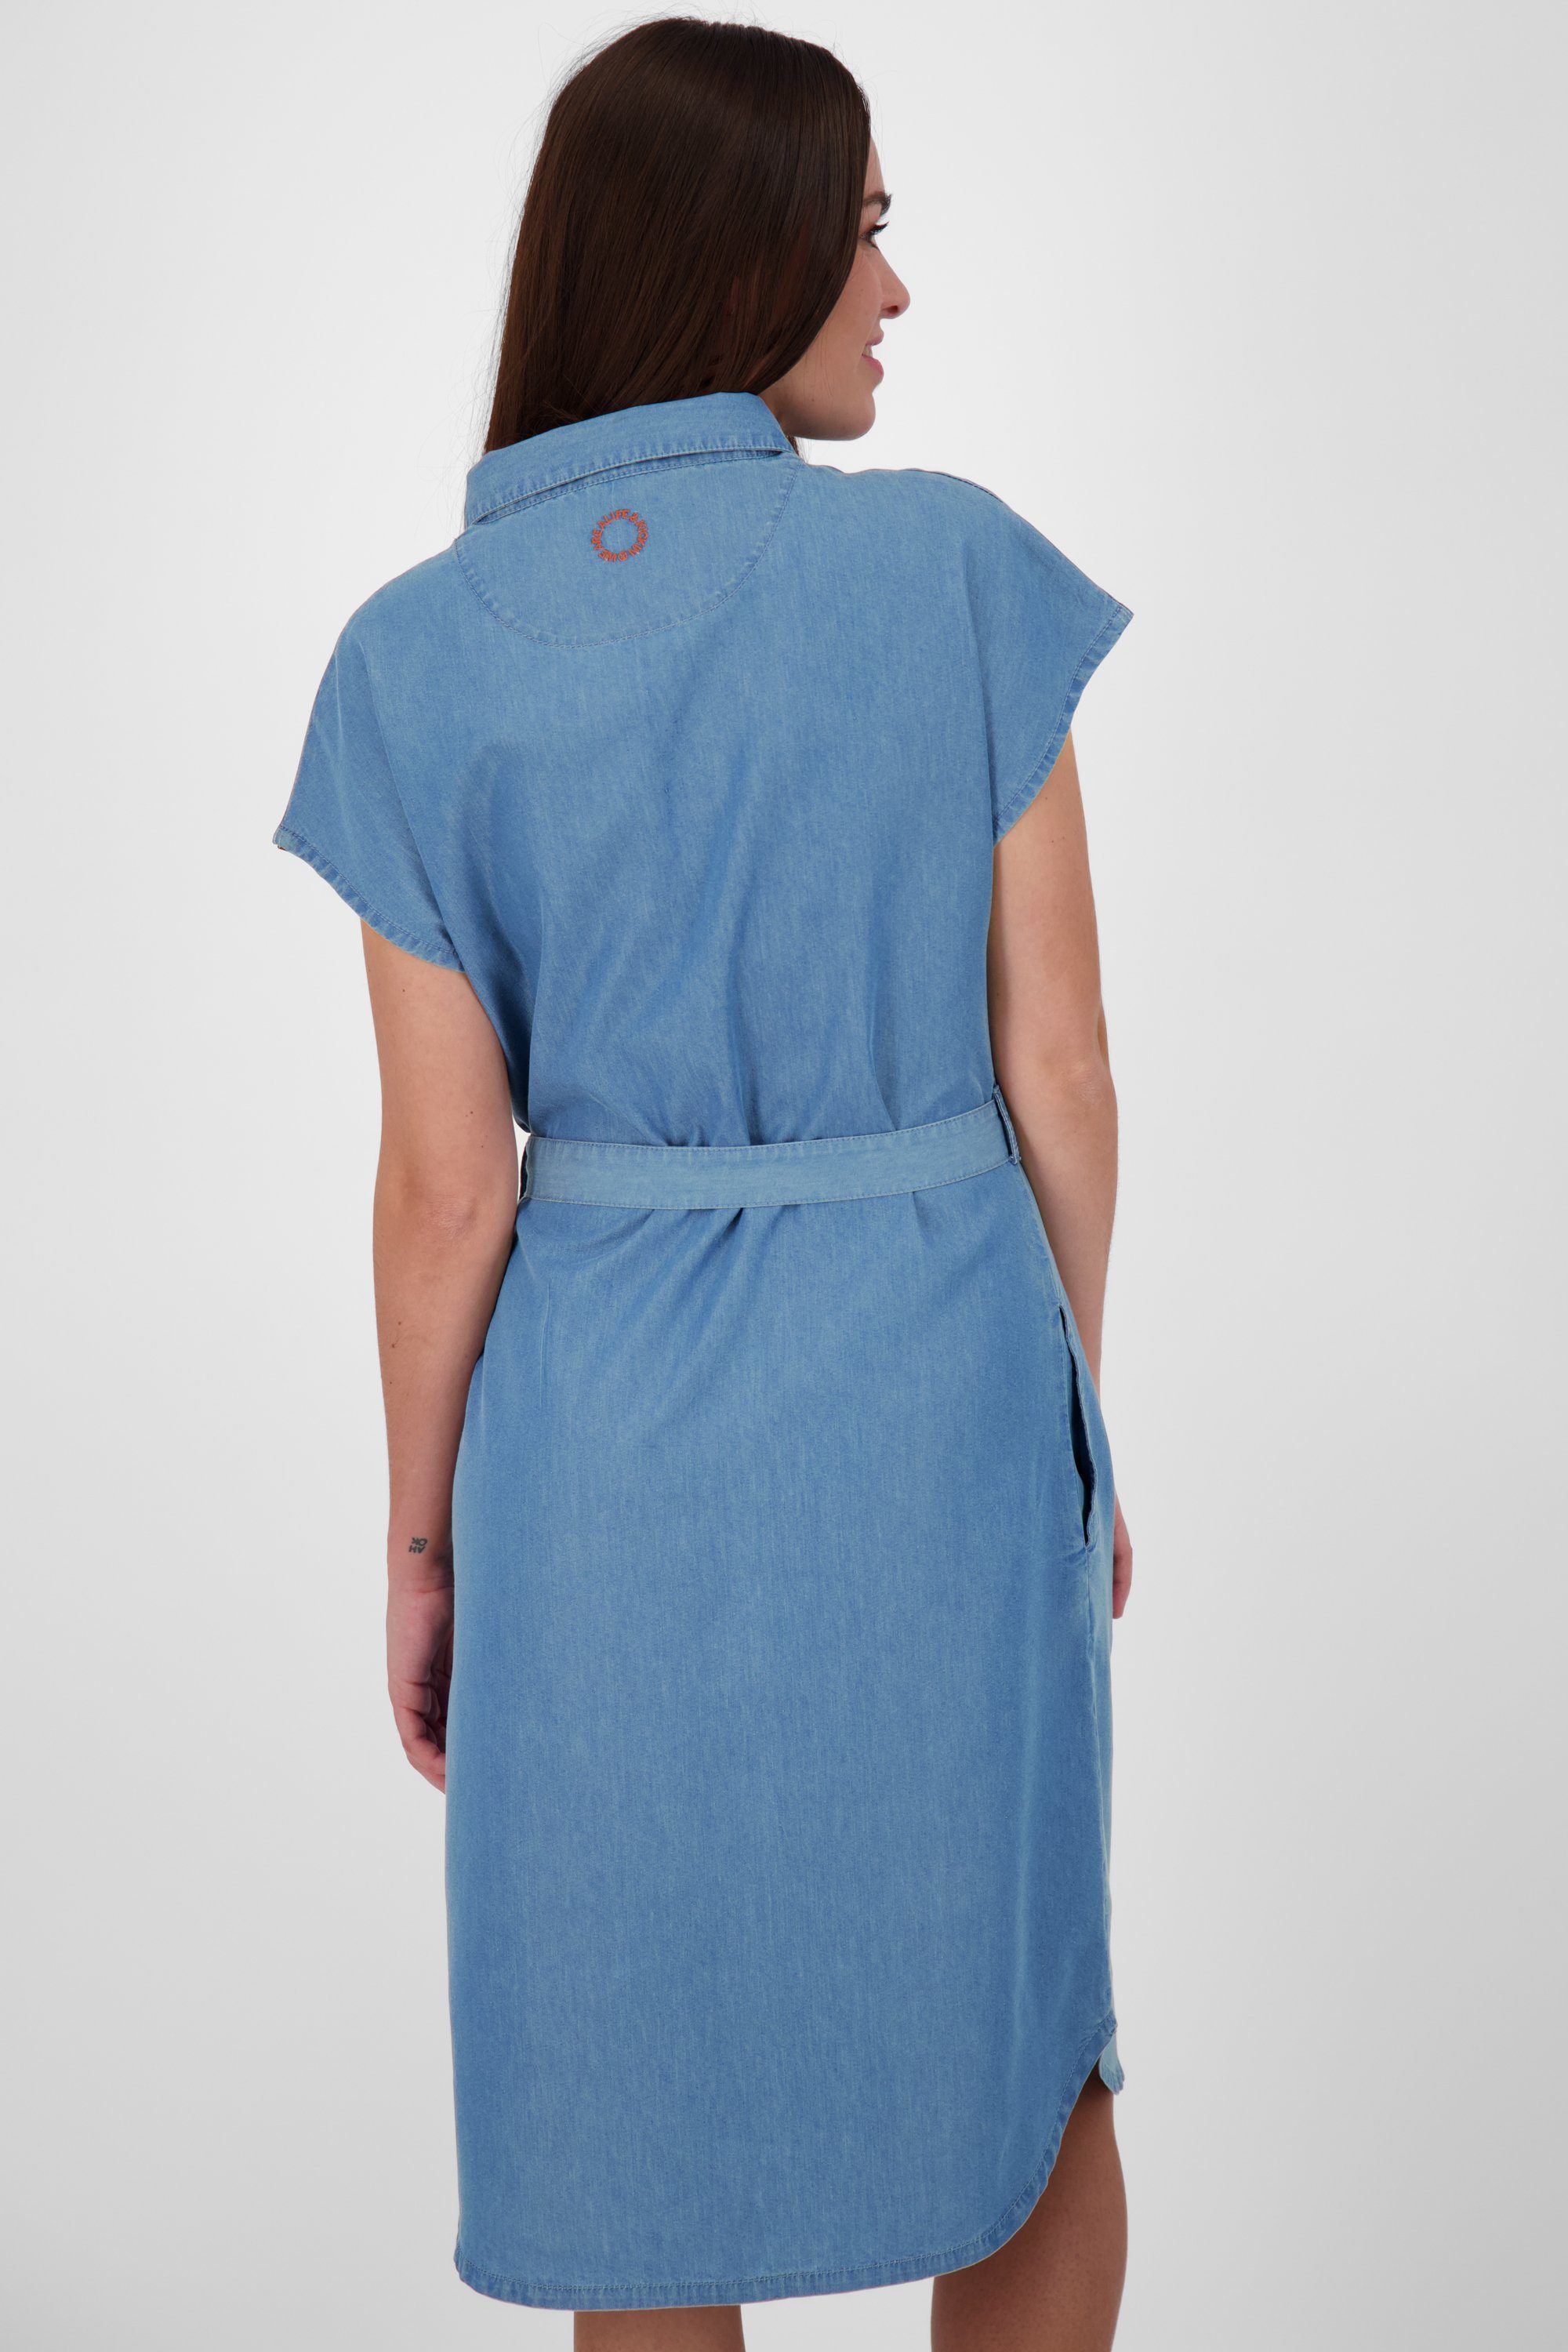 MaeveAK Sommerkleid, washed Kickin Dress Alife Shirt Damen Sommerkleid denim DNM & light A Kleid